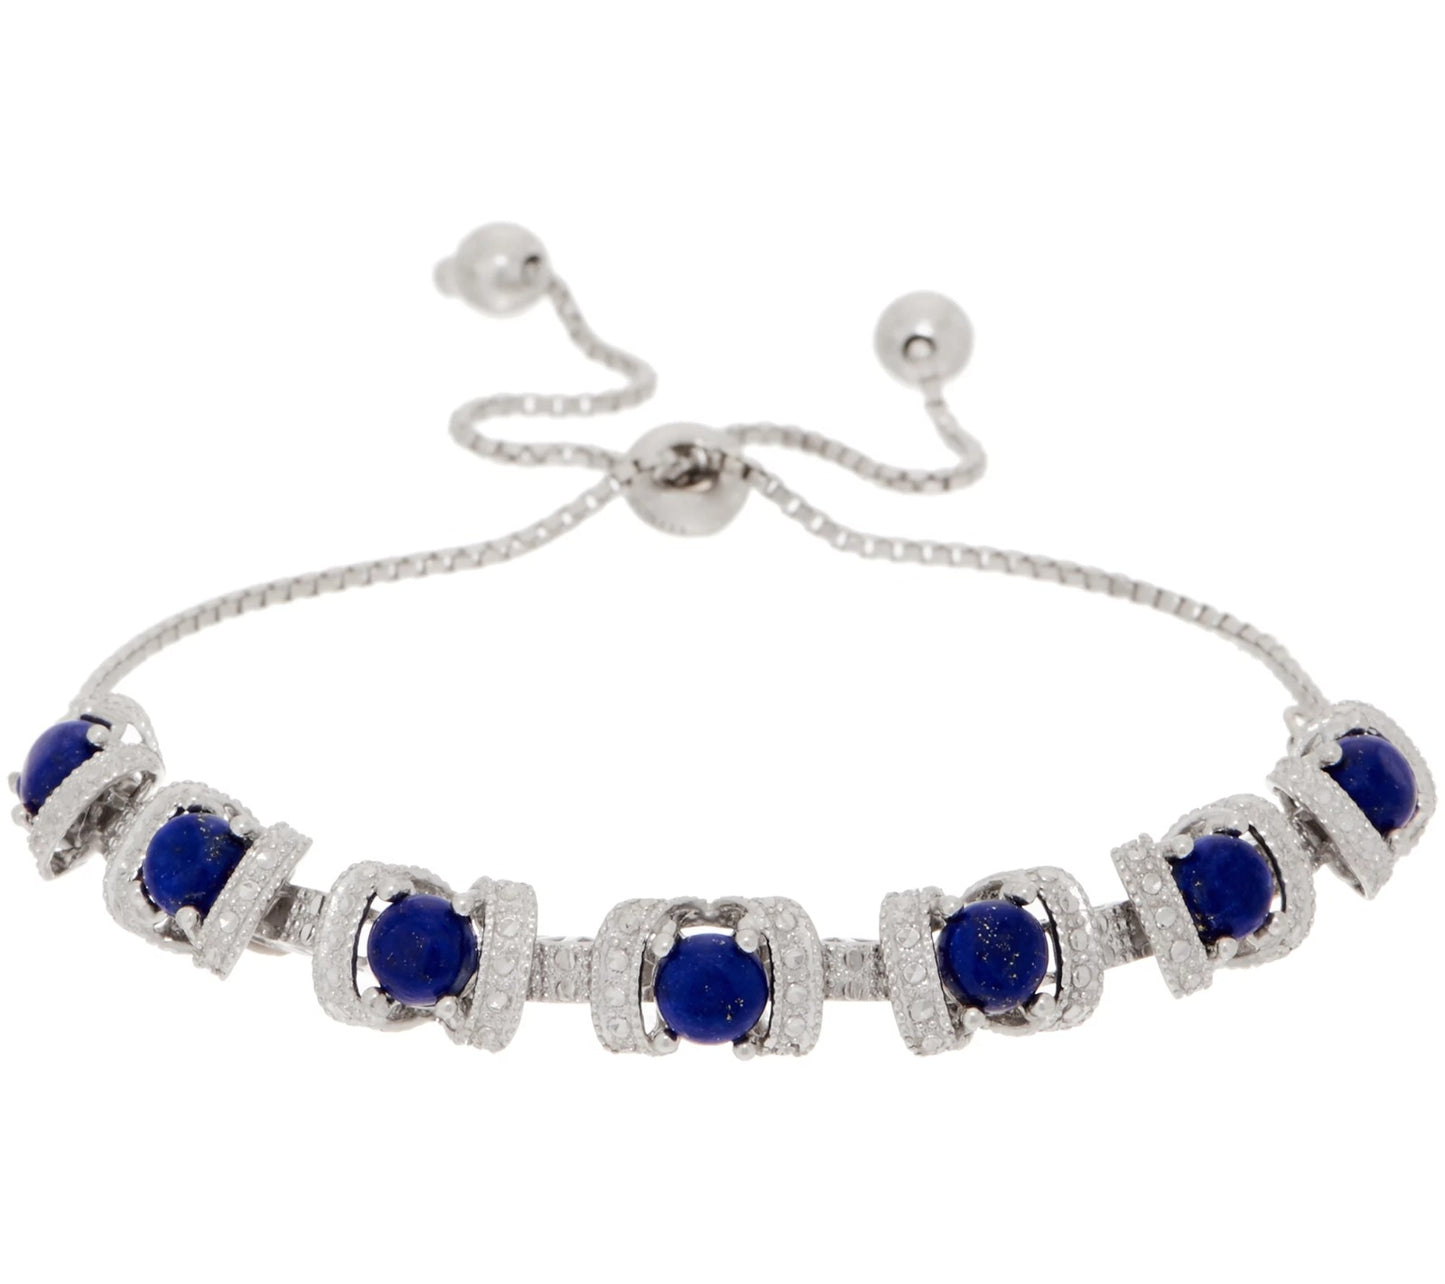 Gemstone Diamond Cut Adjustable Bracelet, Sterling Silver - Blue Lapis